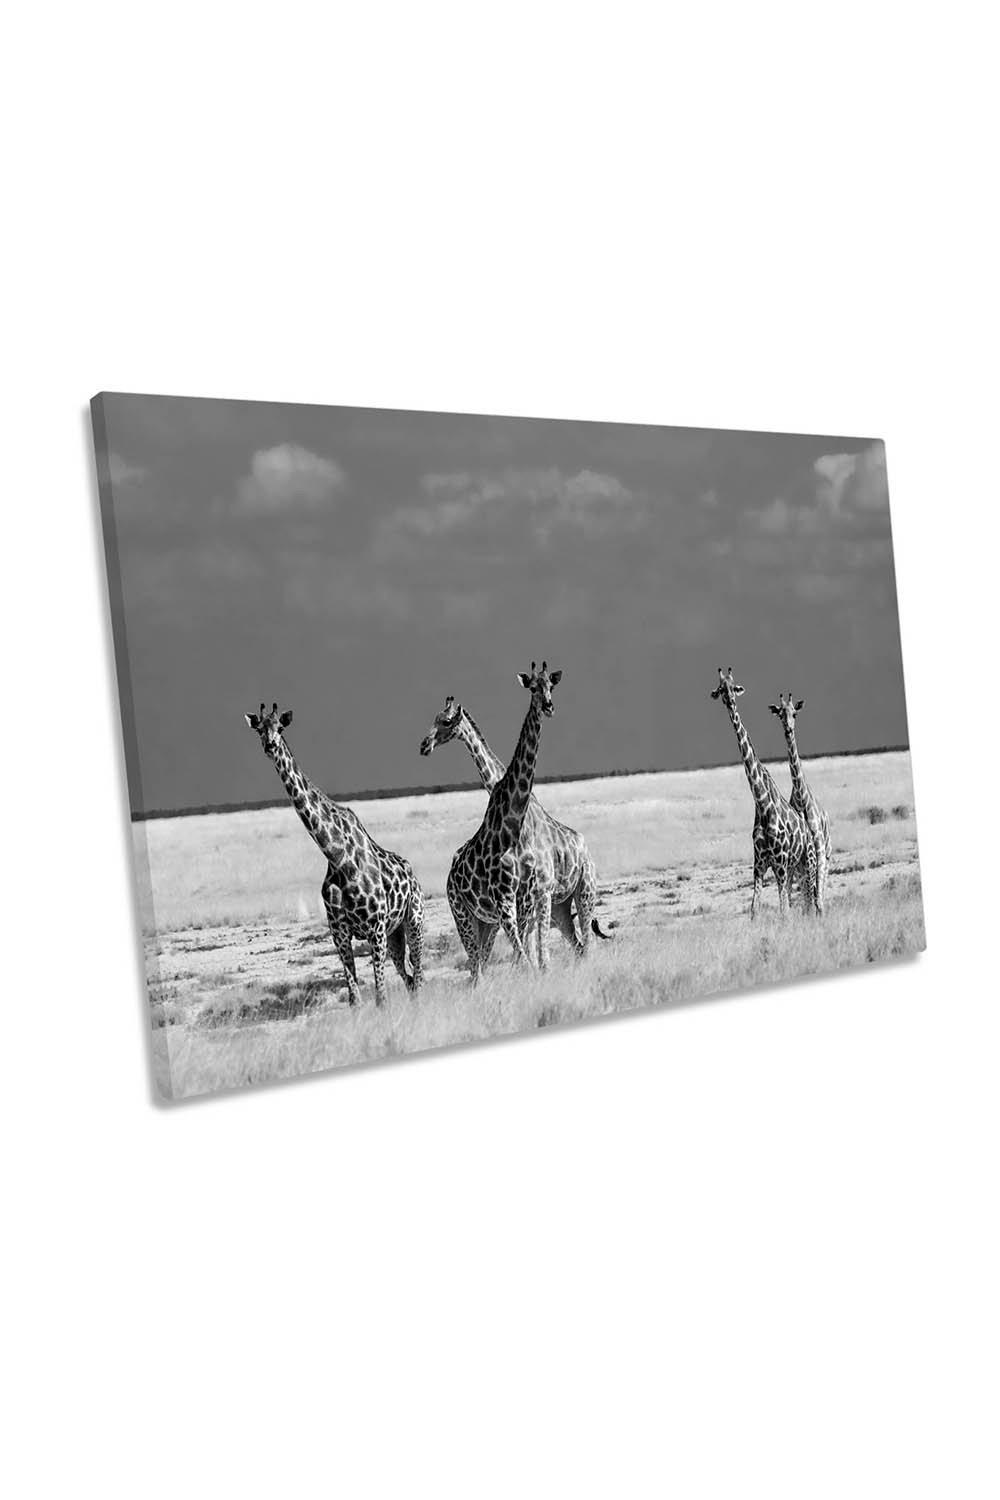 Look Girl Strange Animals Giraffes Canvas Wall Art Picture Print